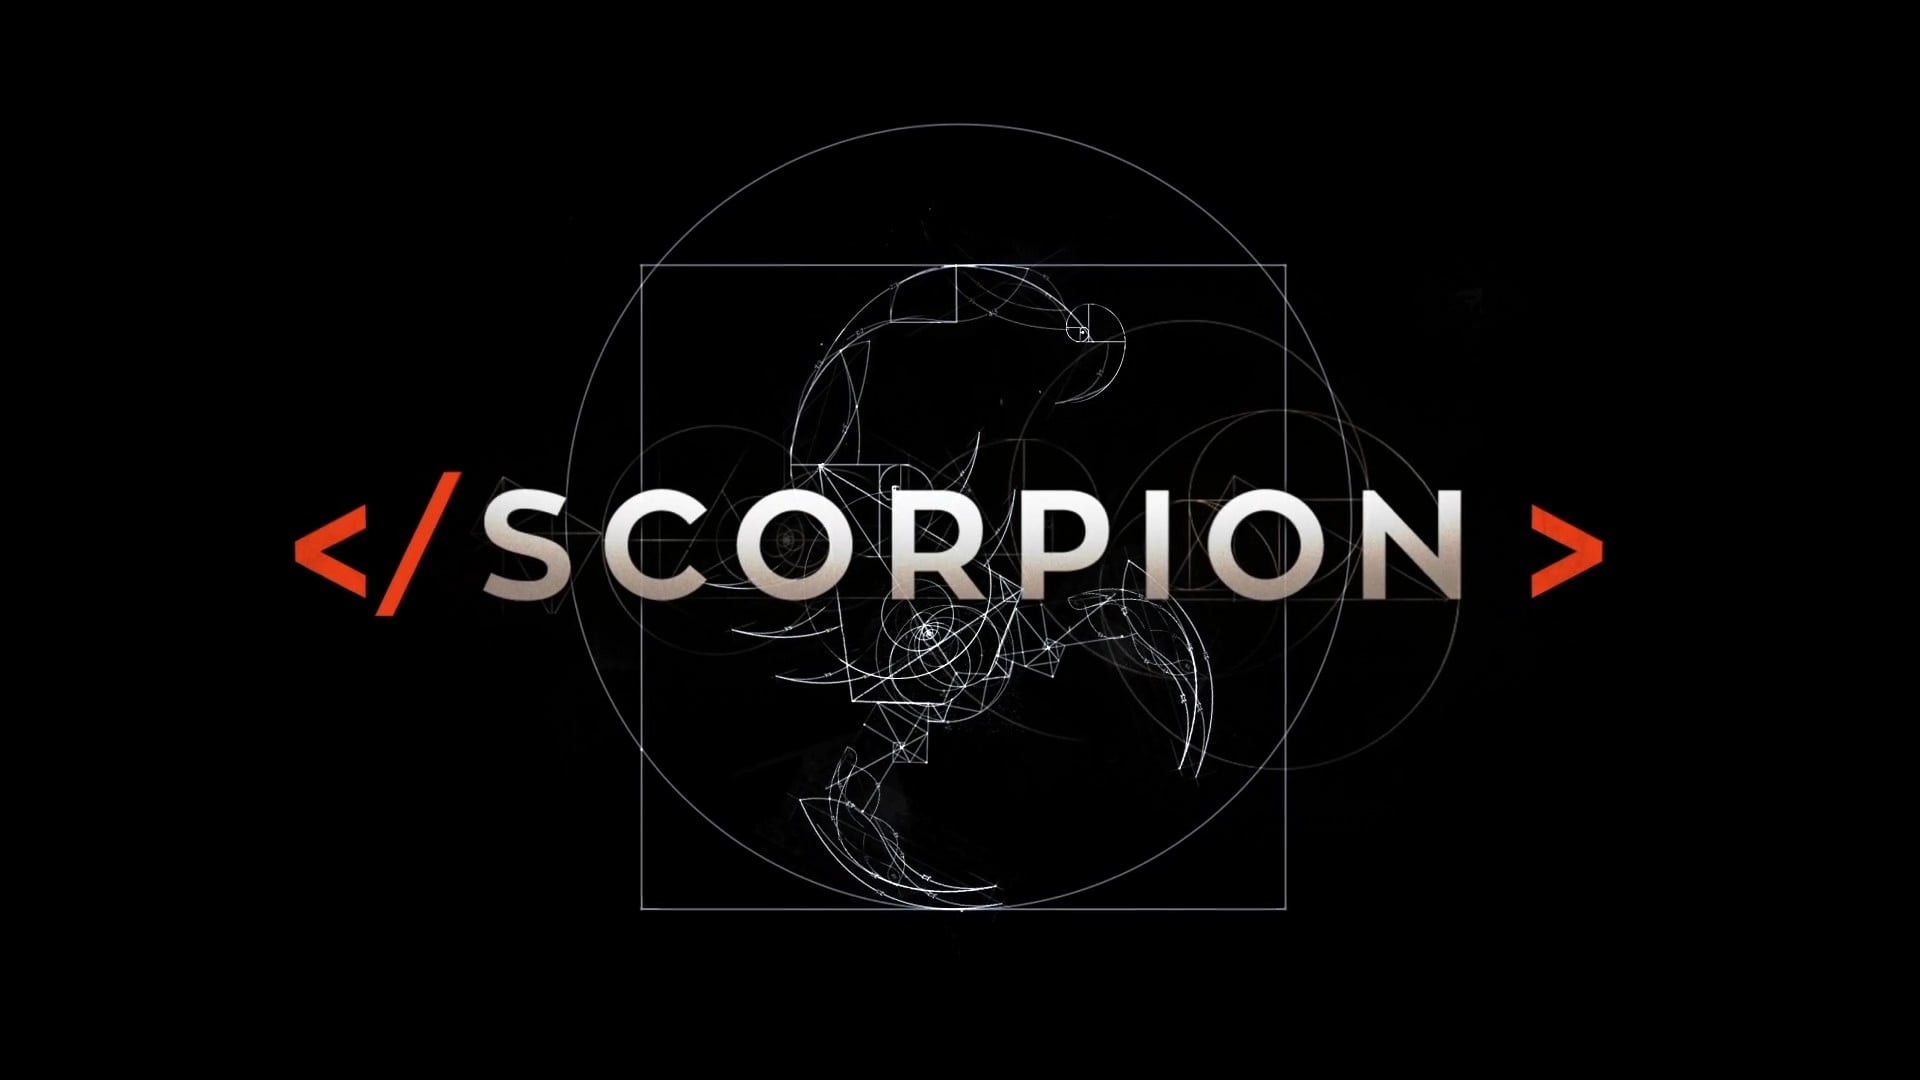 1920x1080 ... Scorpion Wallpapers Scorpion Widescreen